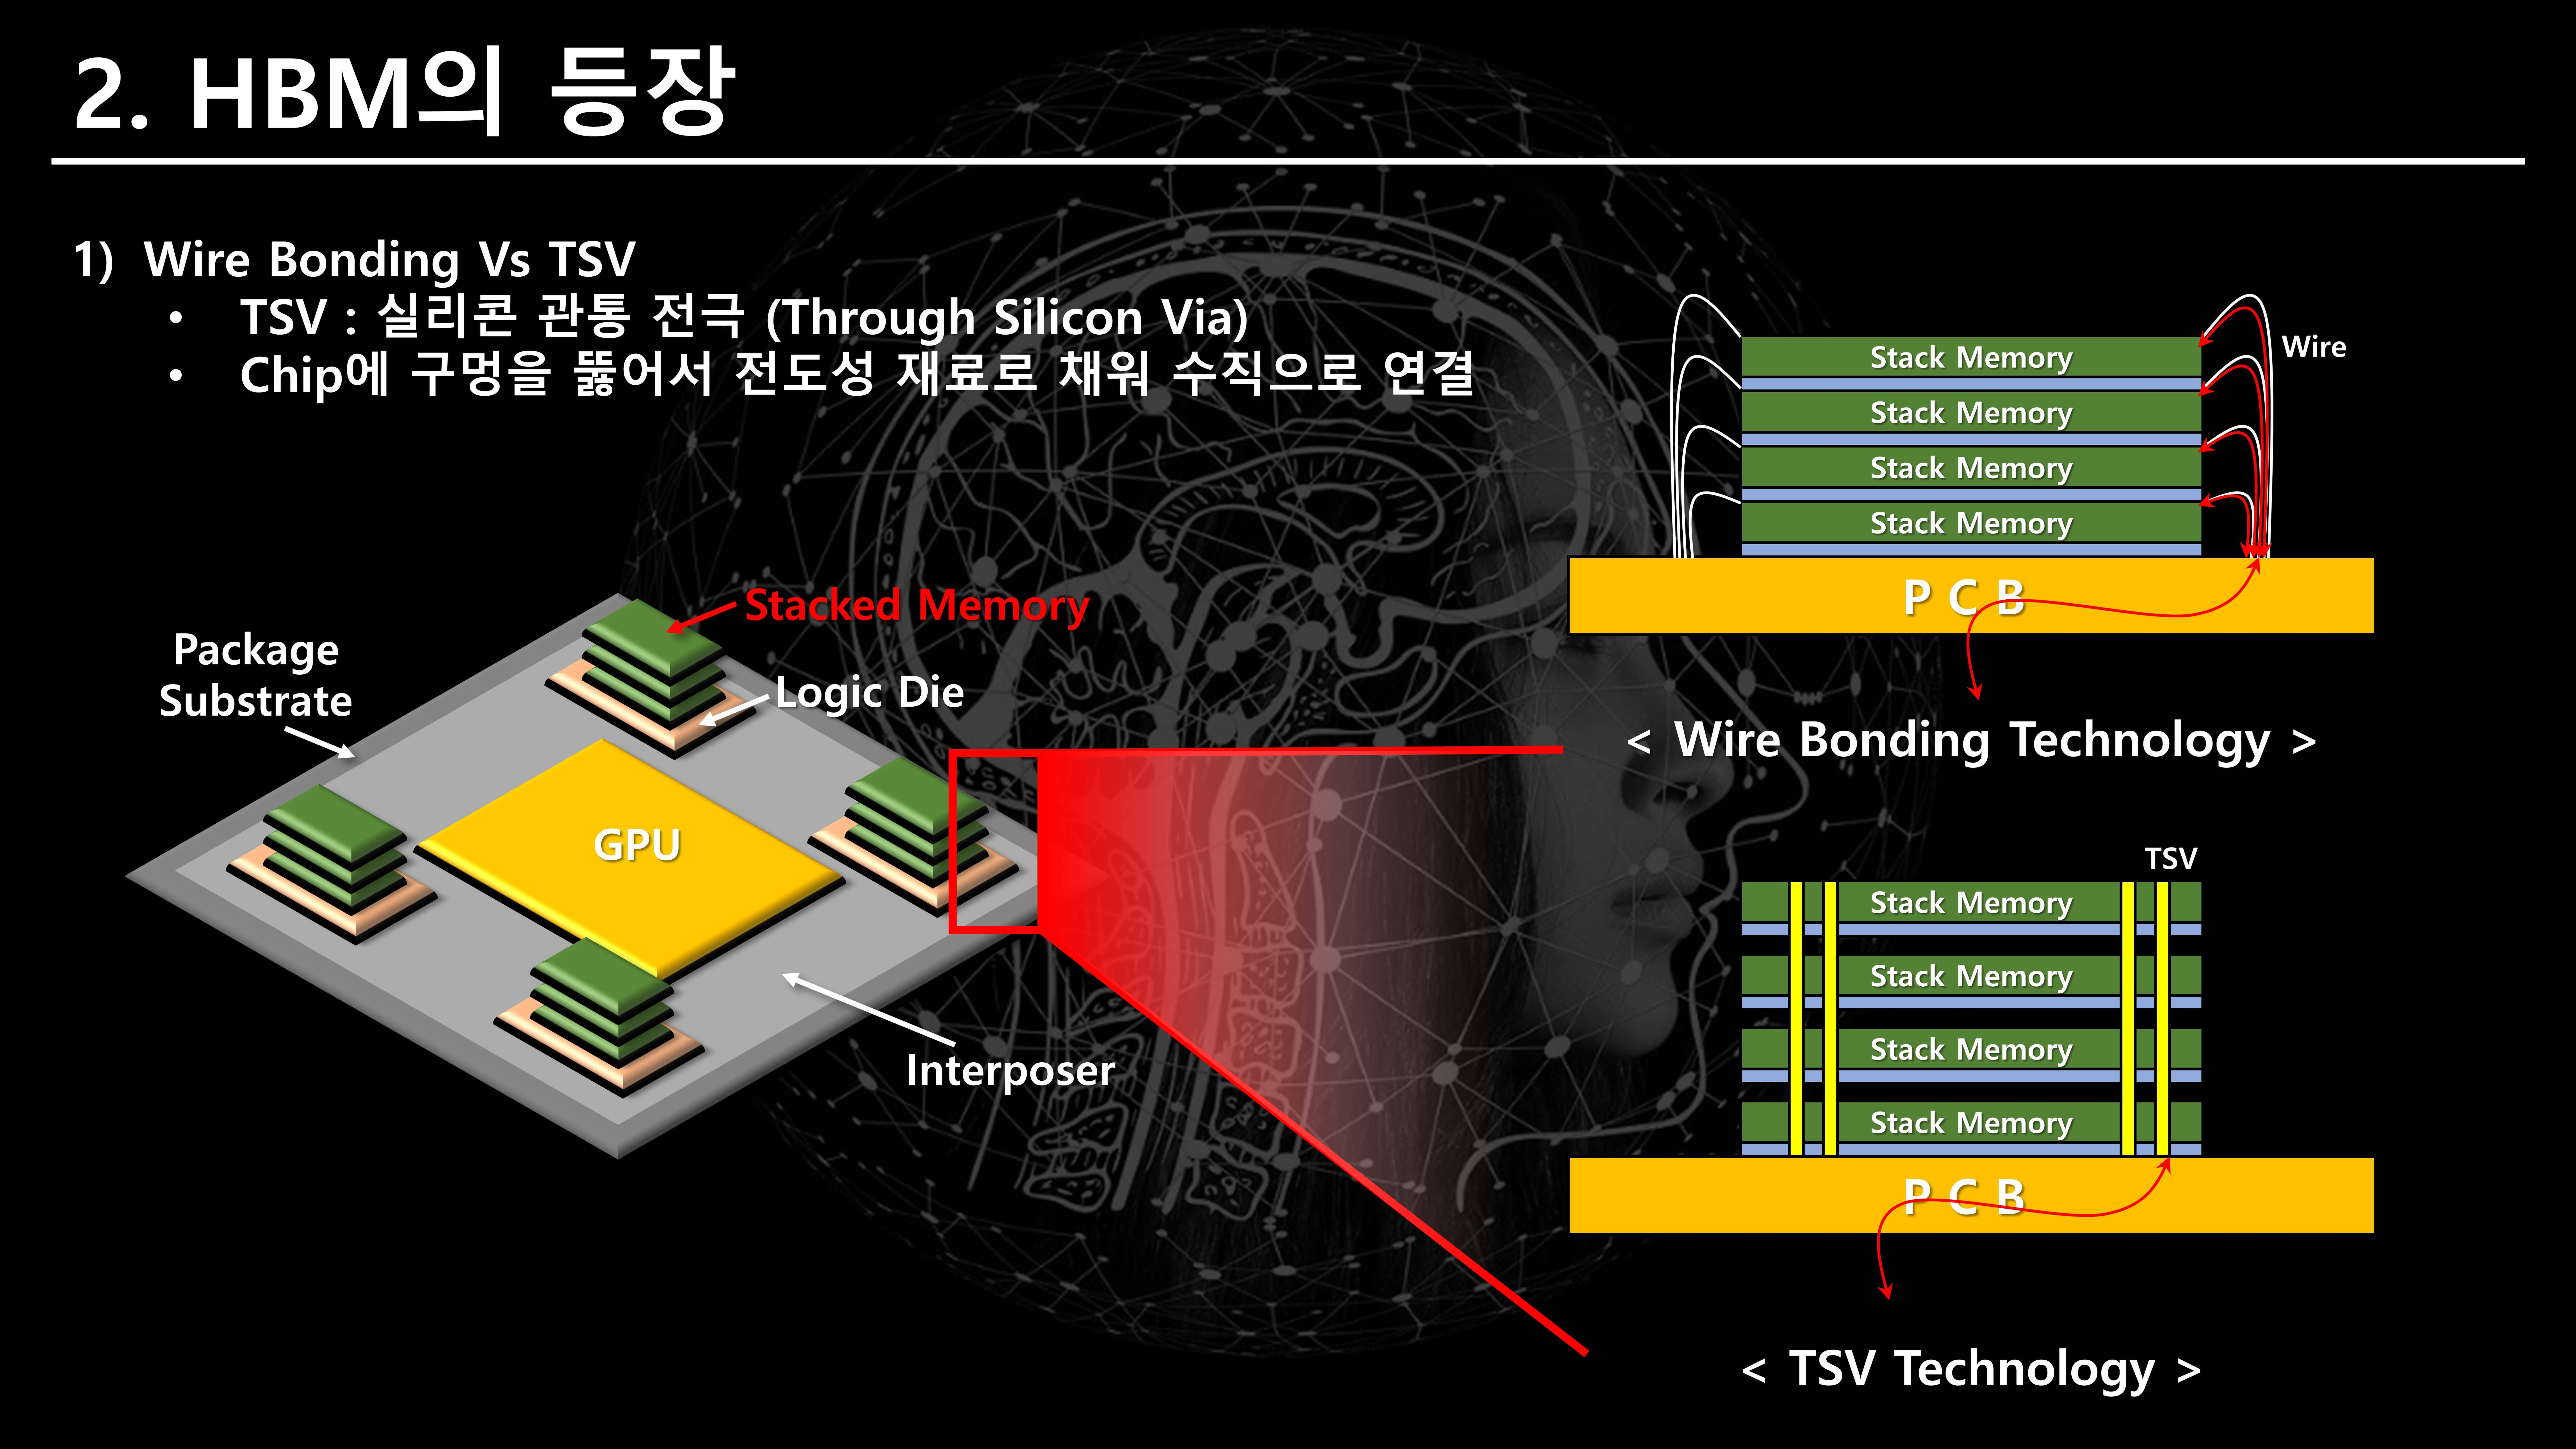 HBM
HBM구조
HBM 특징
TSV 
Wire Bonding
Interposer
SiP